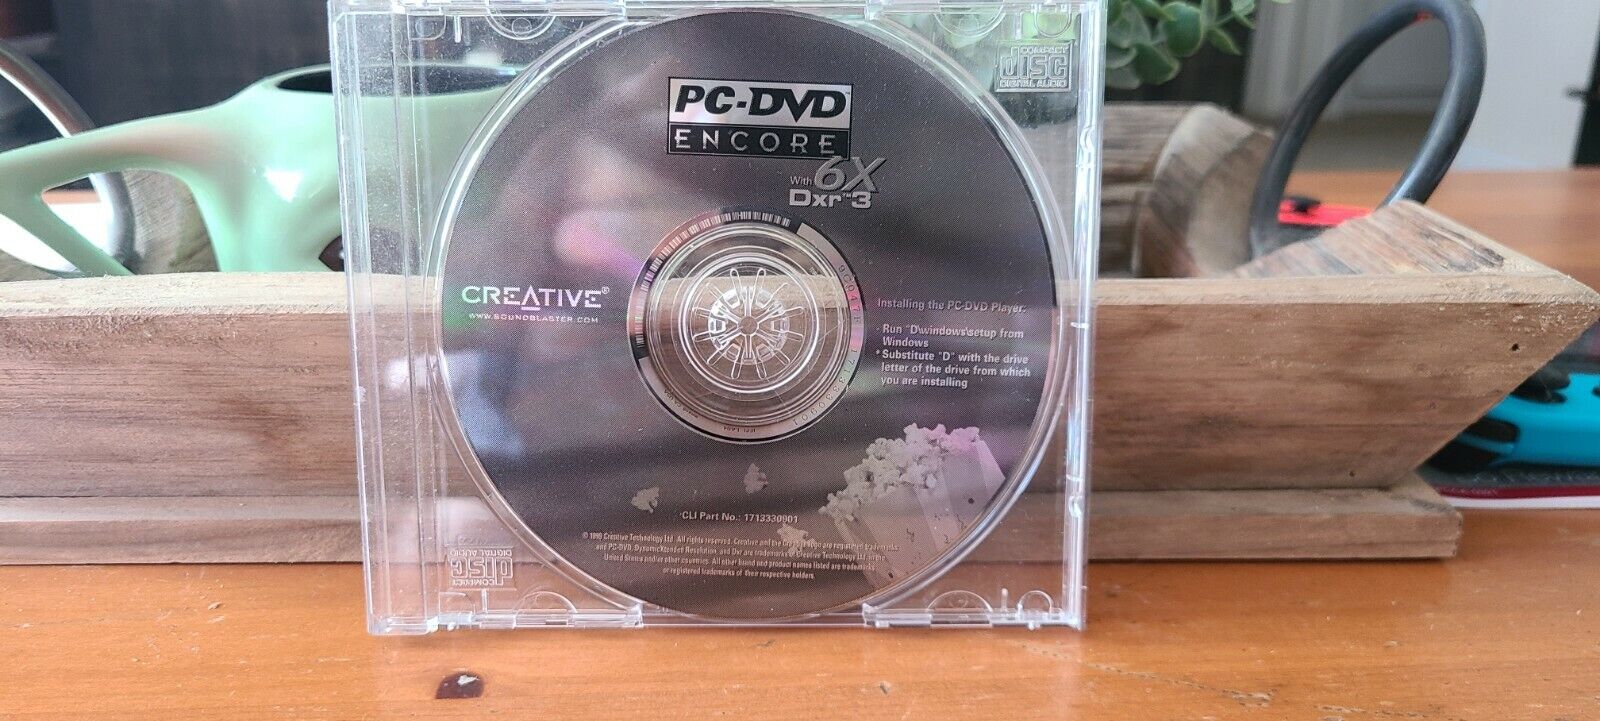 Creative Technology PC DVD Encore With 6X Dxr3 CD Disc Vintage 1999